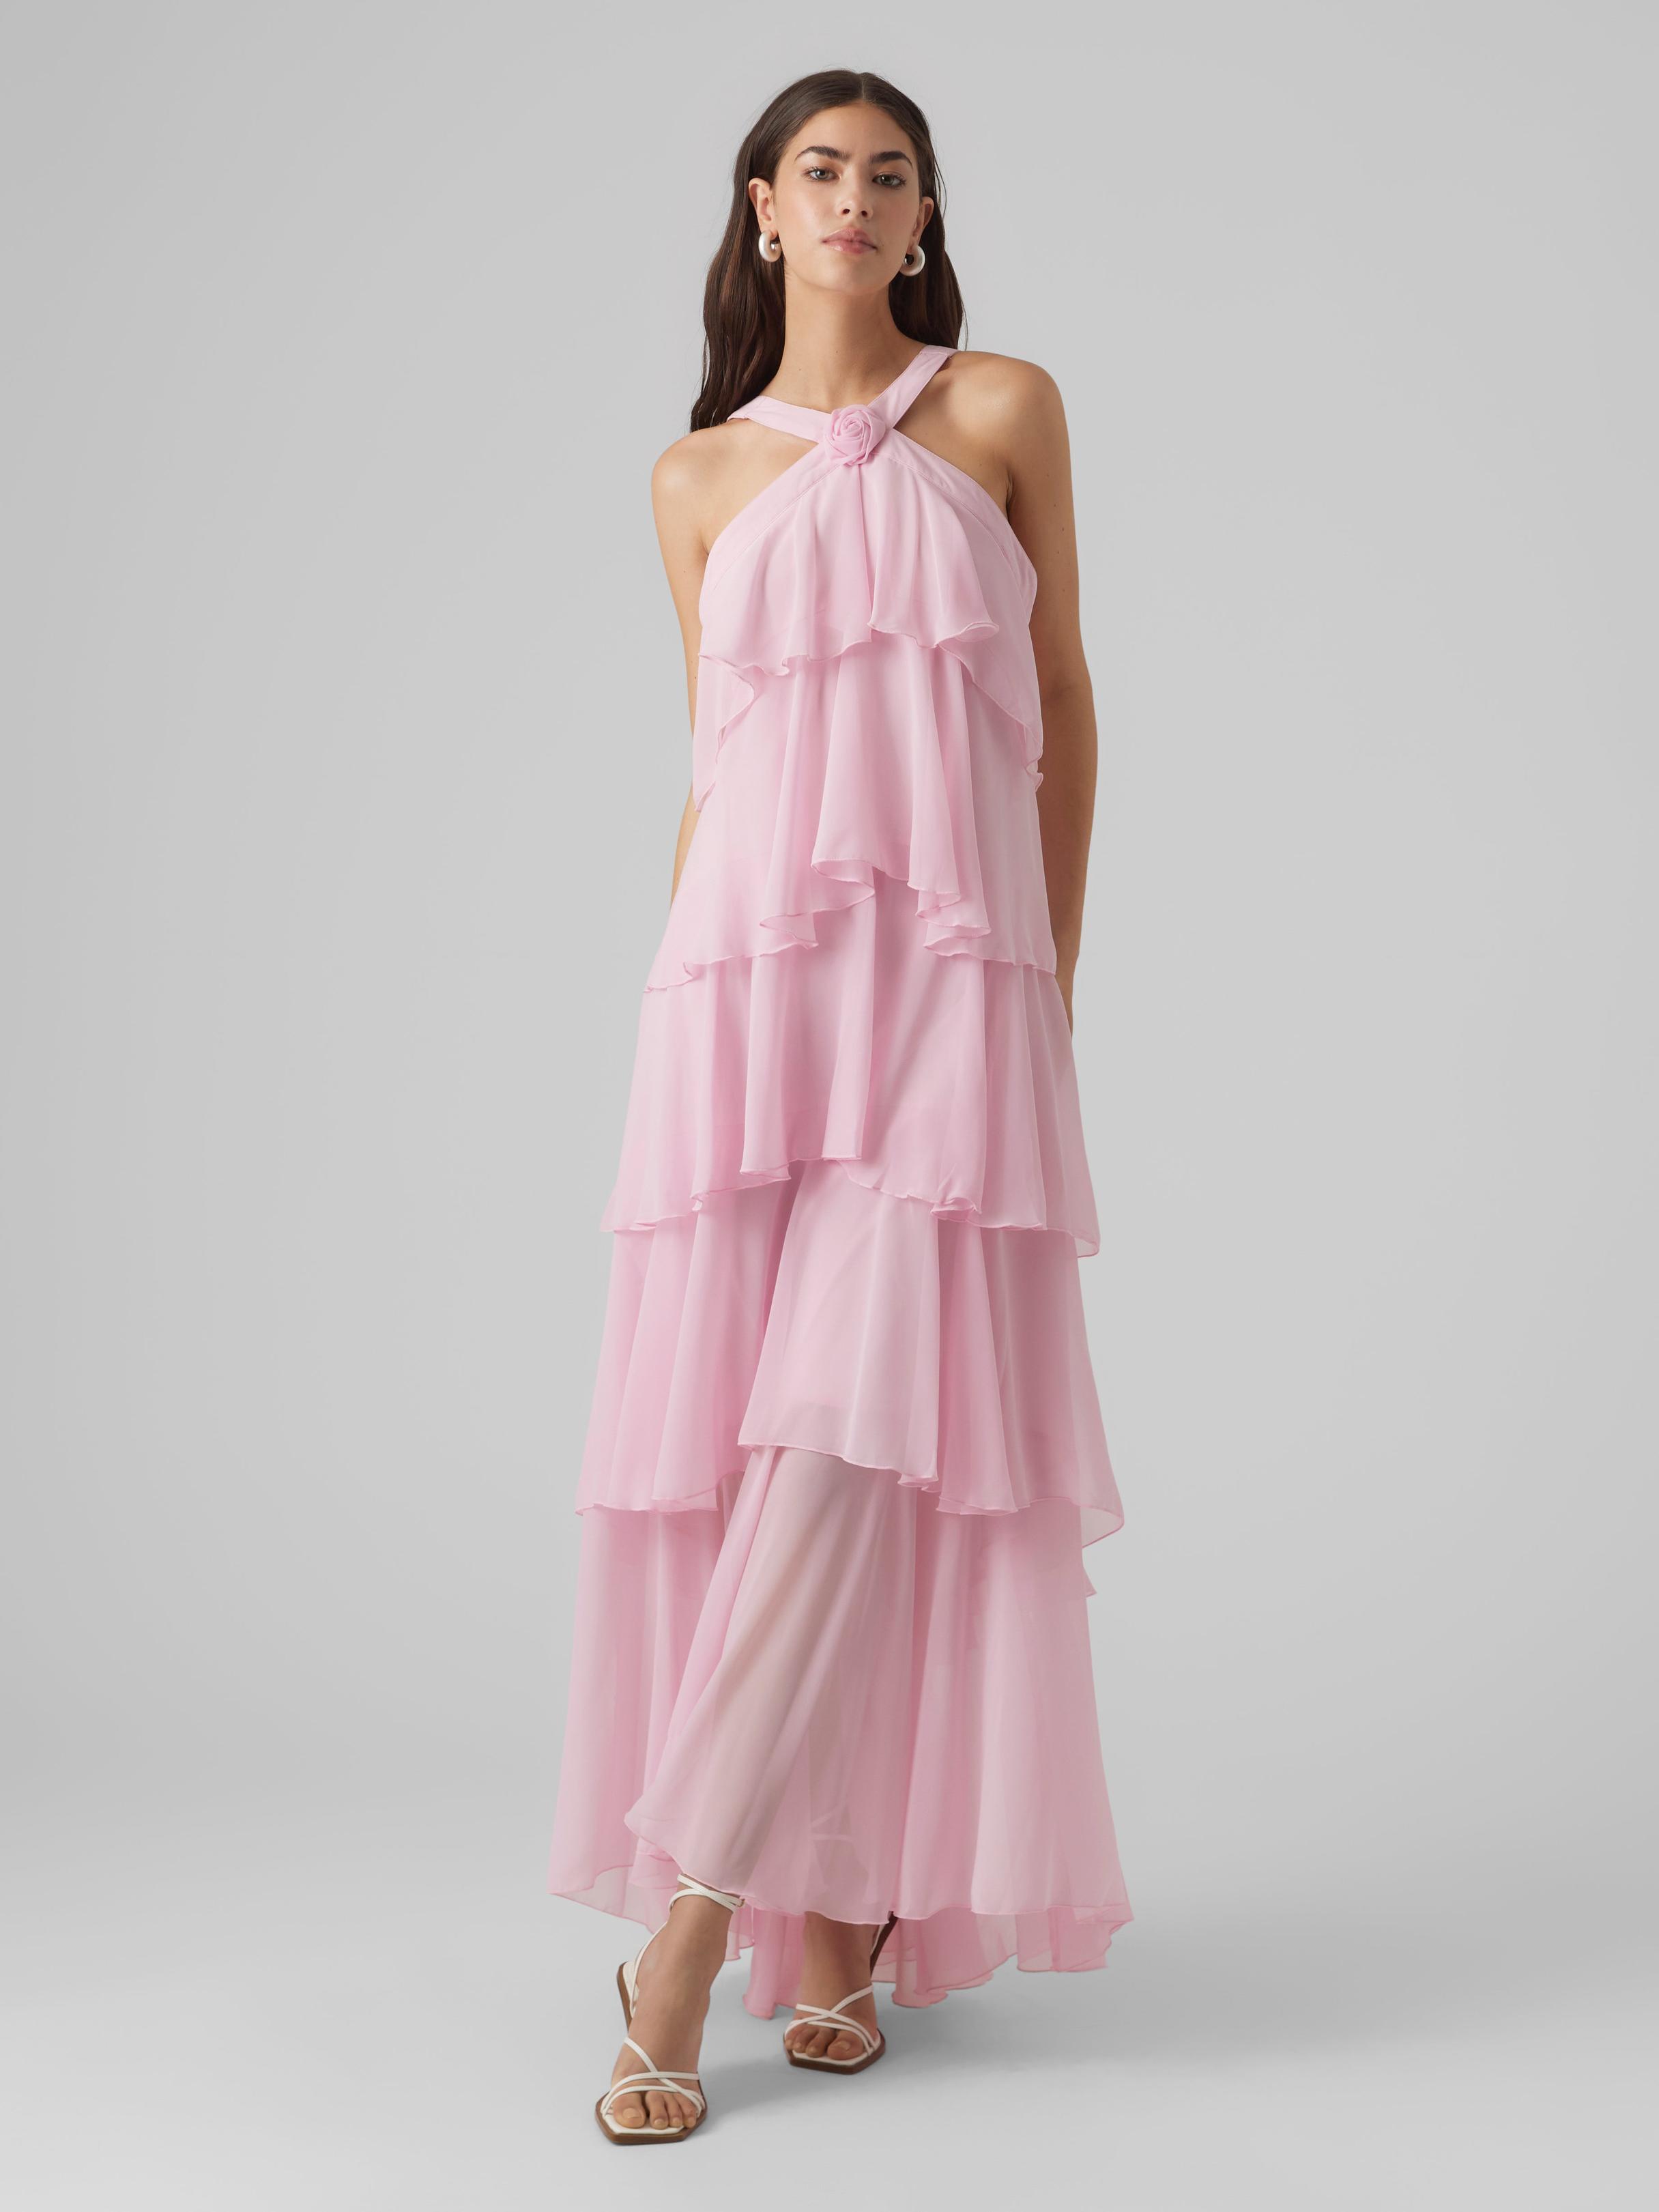 Tilbud: VMFELICIA Lang kjole kr 1199,95 på Vero Moda